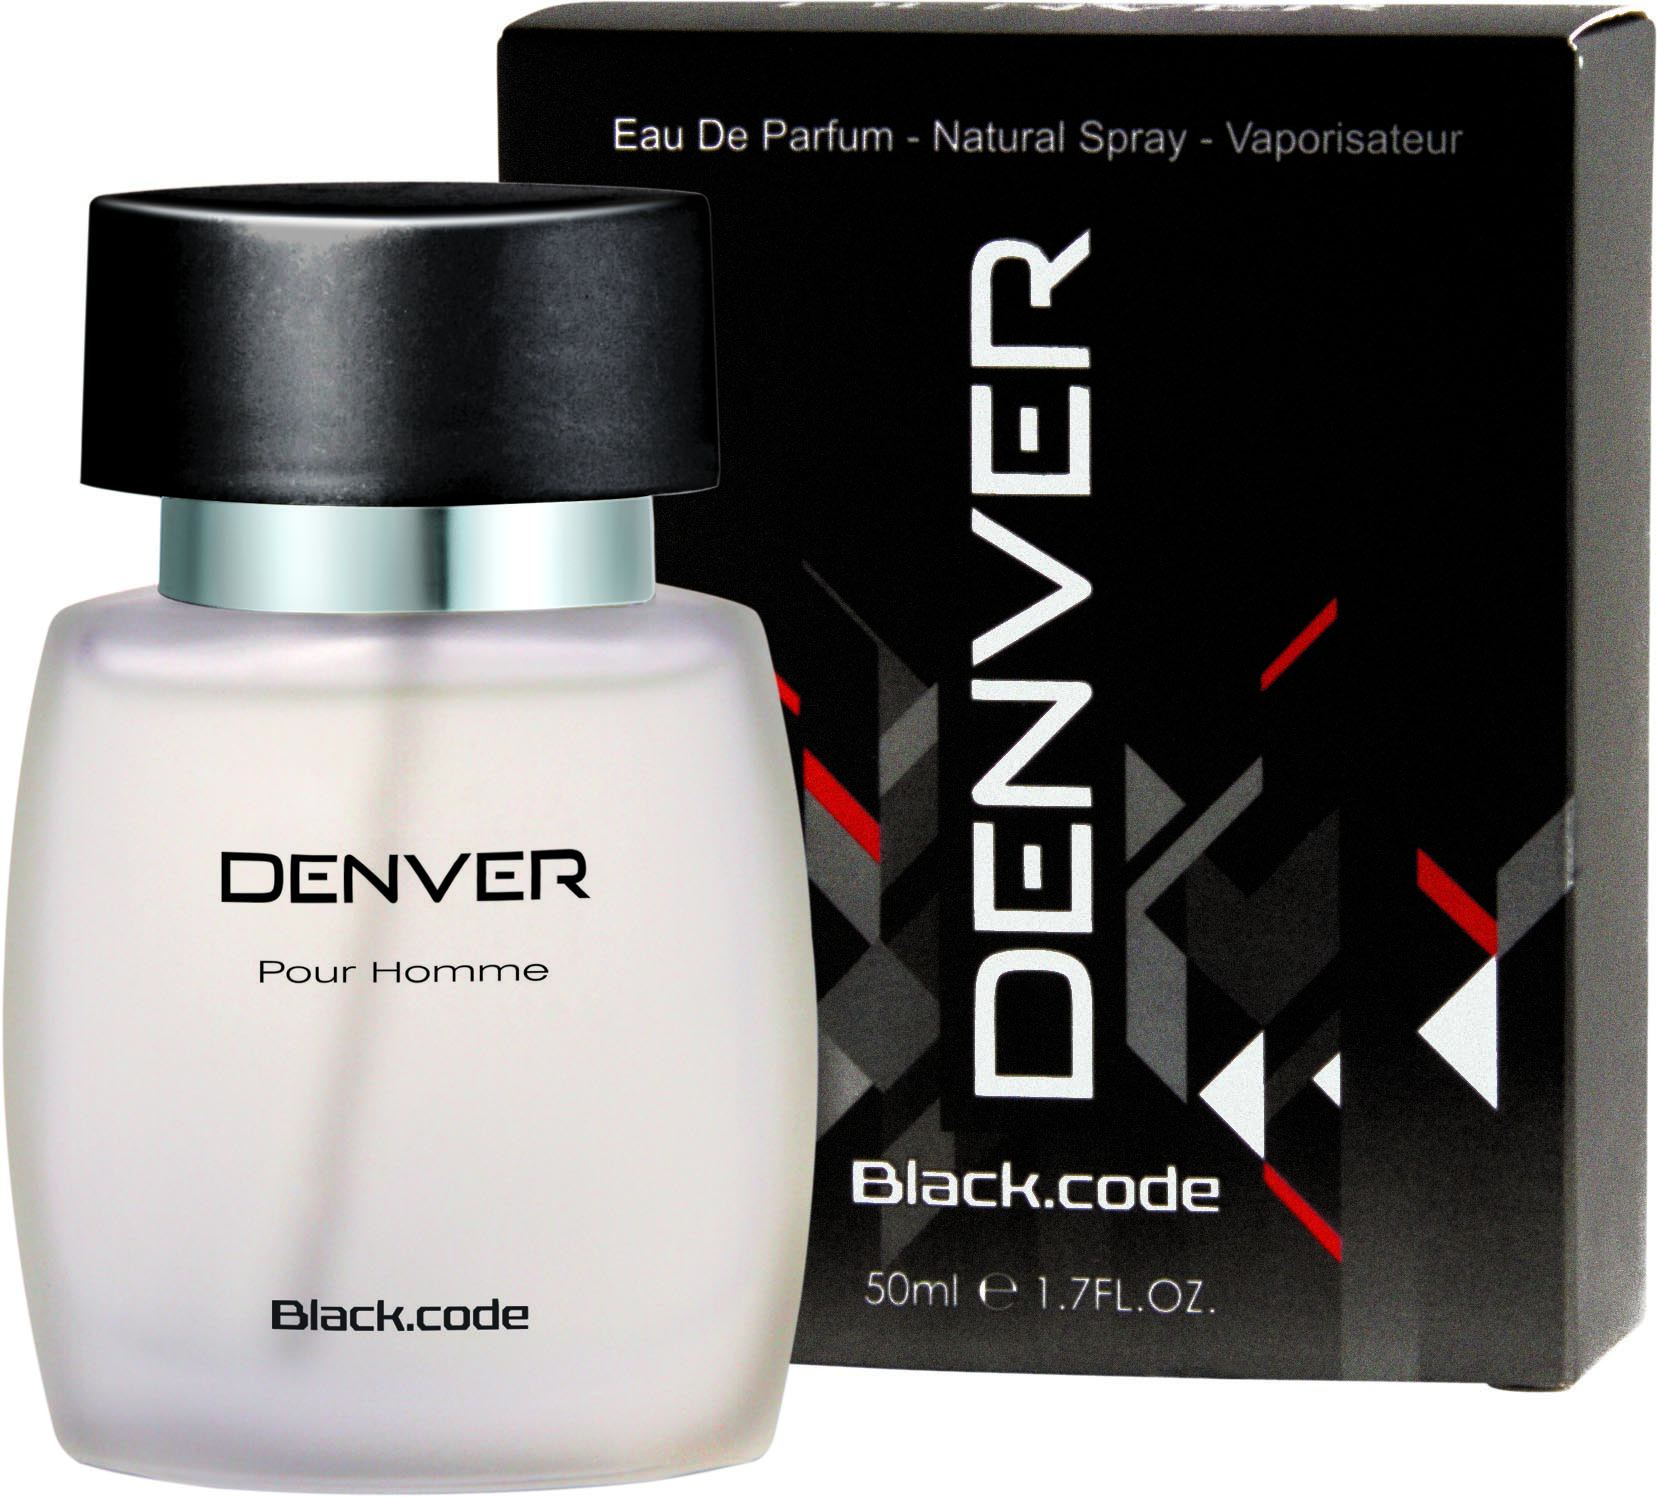 Buy Denver Black Code Perfume 50 Ml Online ₹220 from ShopClues